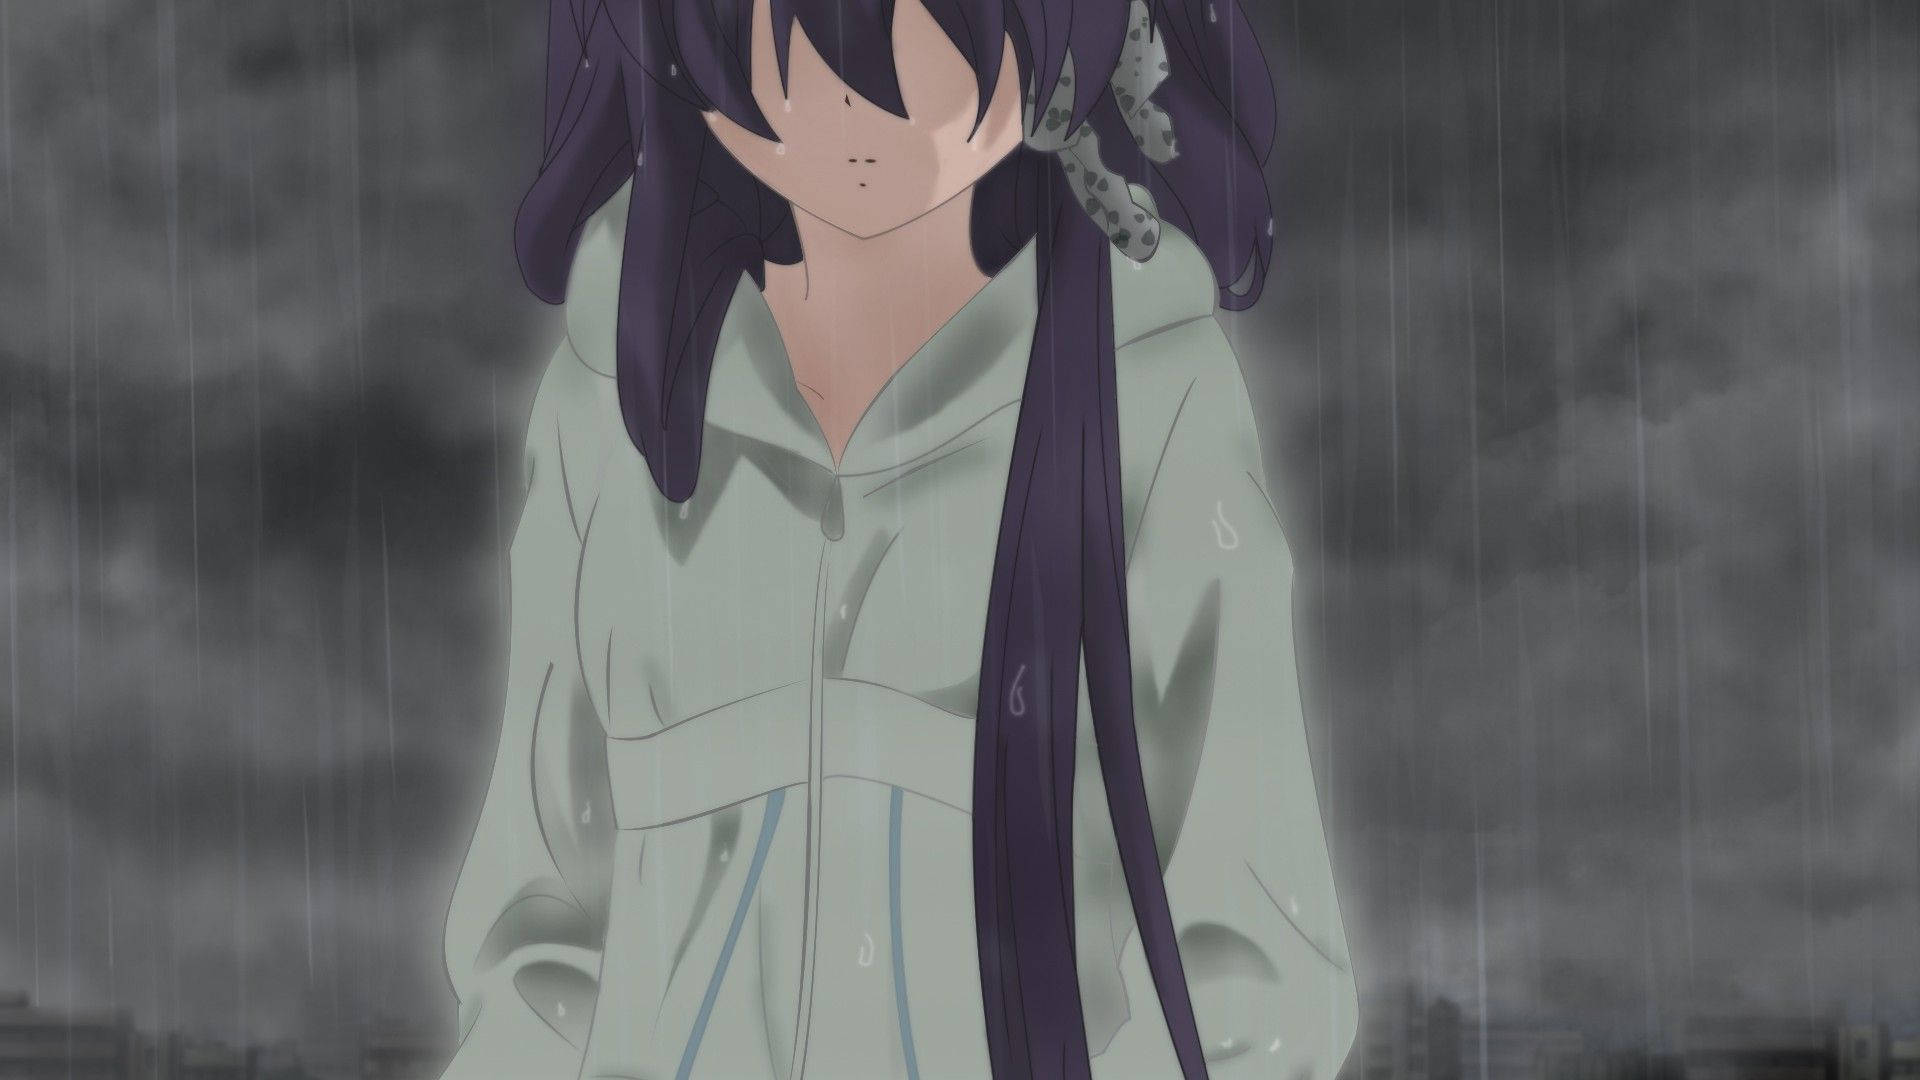 Free Depressed Anime Girl Wallpaper Downloads, [100+] Depressed Anime Girl  Wallpapers for FREE 